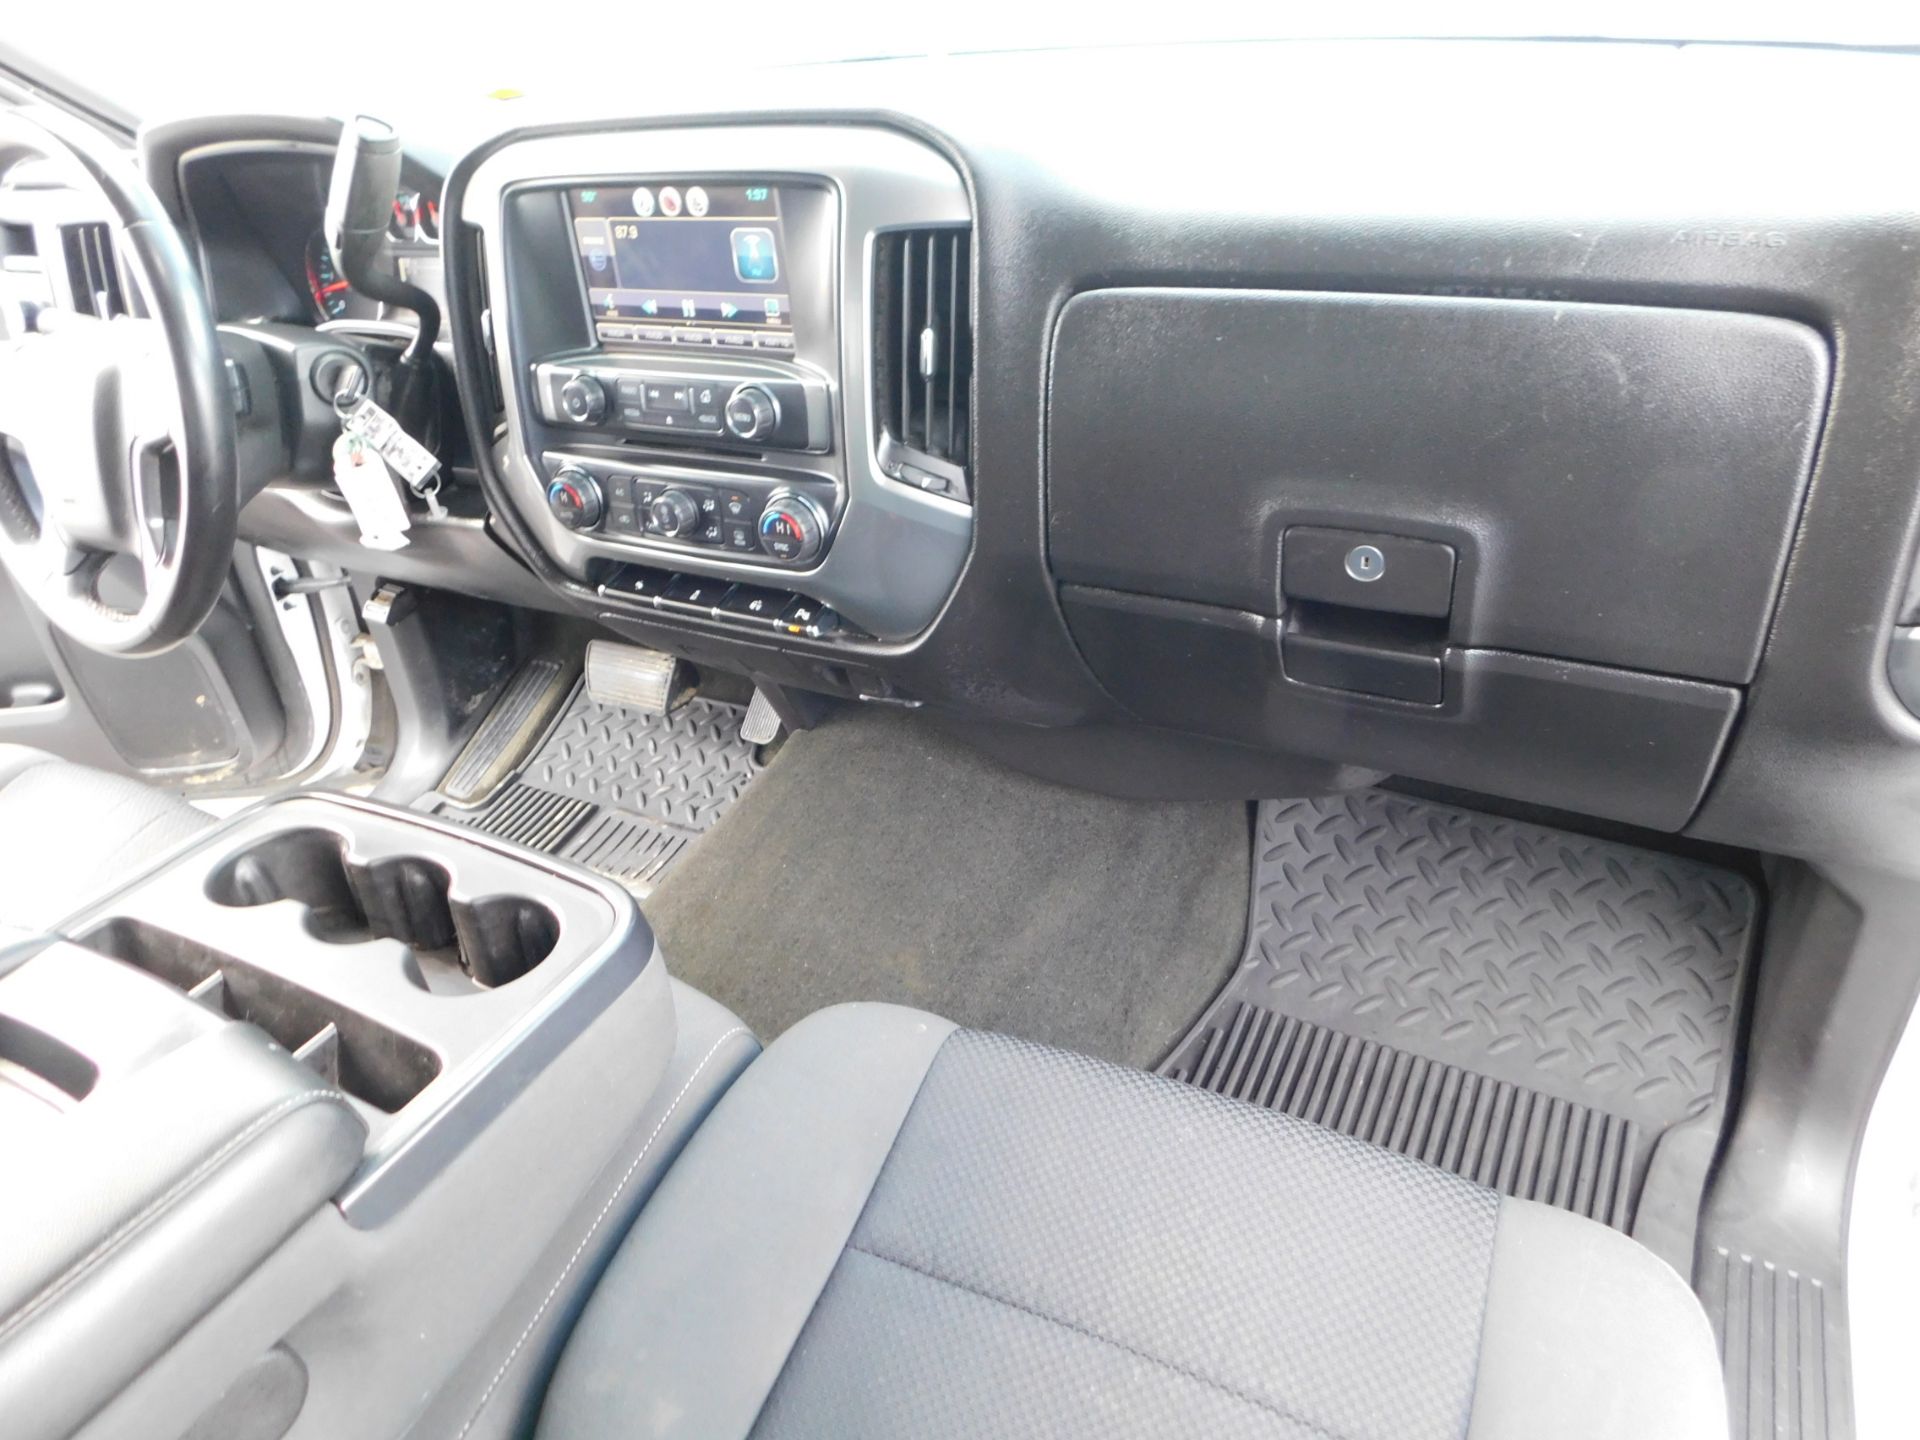 2014 Chevrolet Silverado LT Pickup, VIN 1GCVKREC3EZ139405, 4-Door 4 WD, Automatic, AM/FM, AC, Cruise - Image 45 of 51